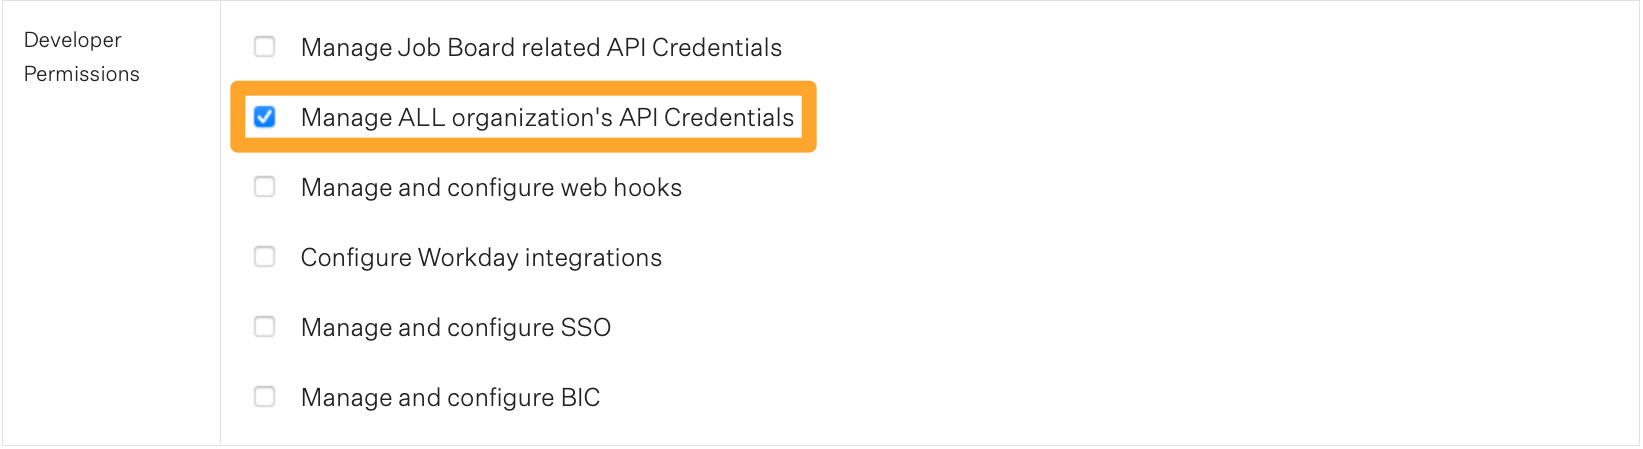 Screenshot of developer permission: Can manage ALL organization's API credentials